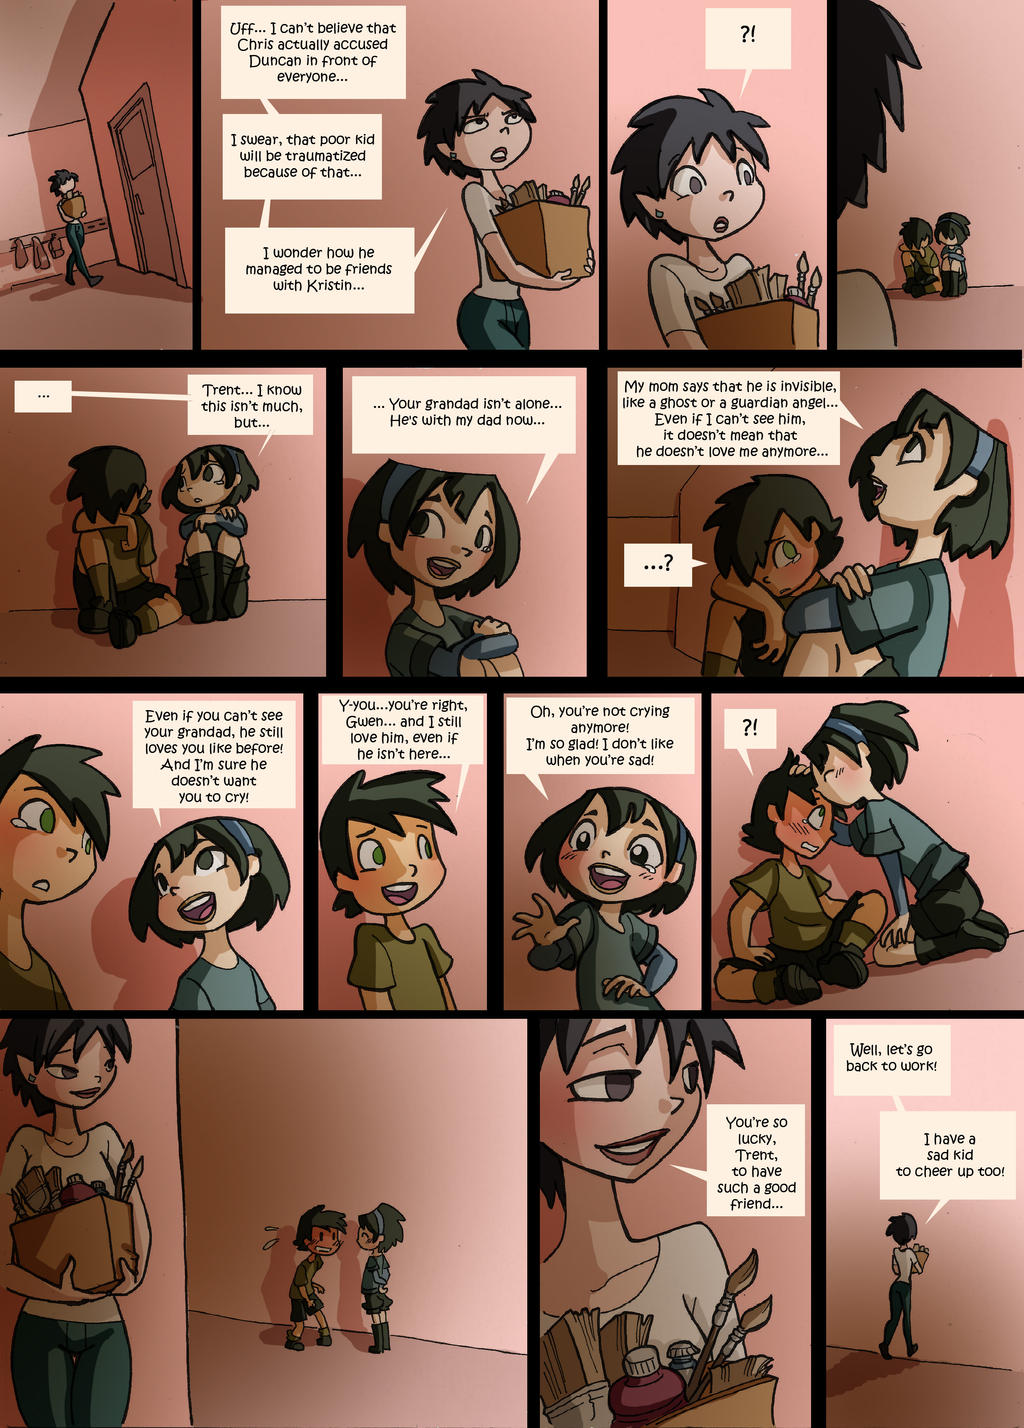 Total Drama Kids Comic: Page 21 - L'Île des défis extrêmes fan Art  (37573109) - fanpop